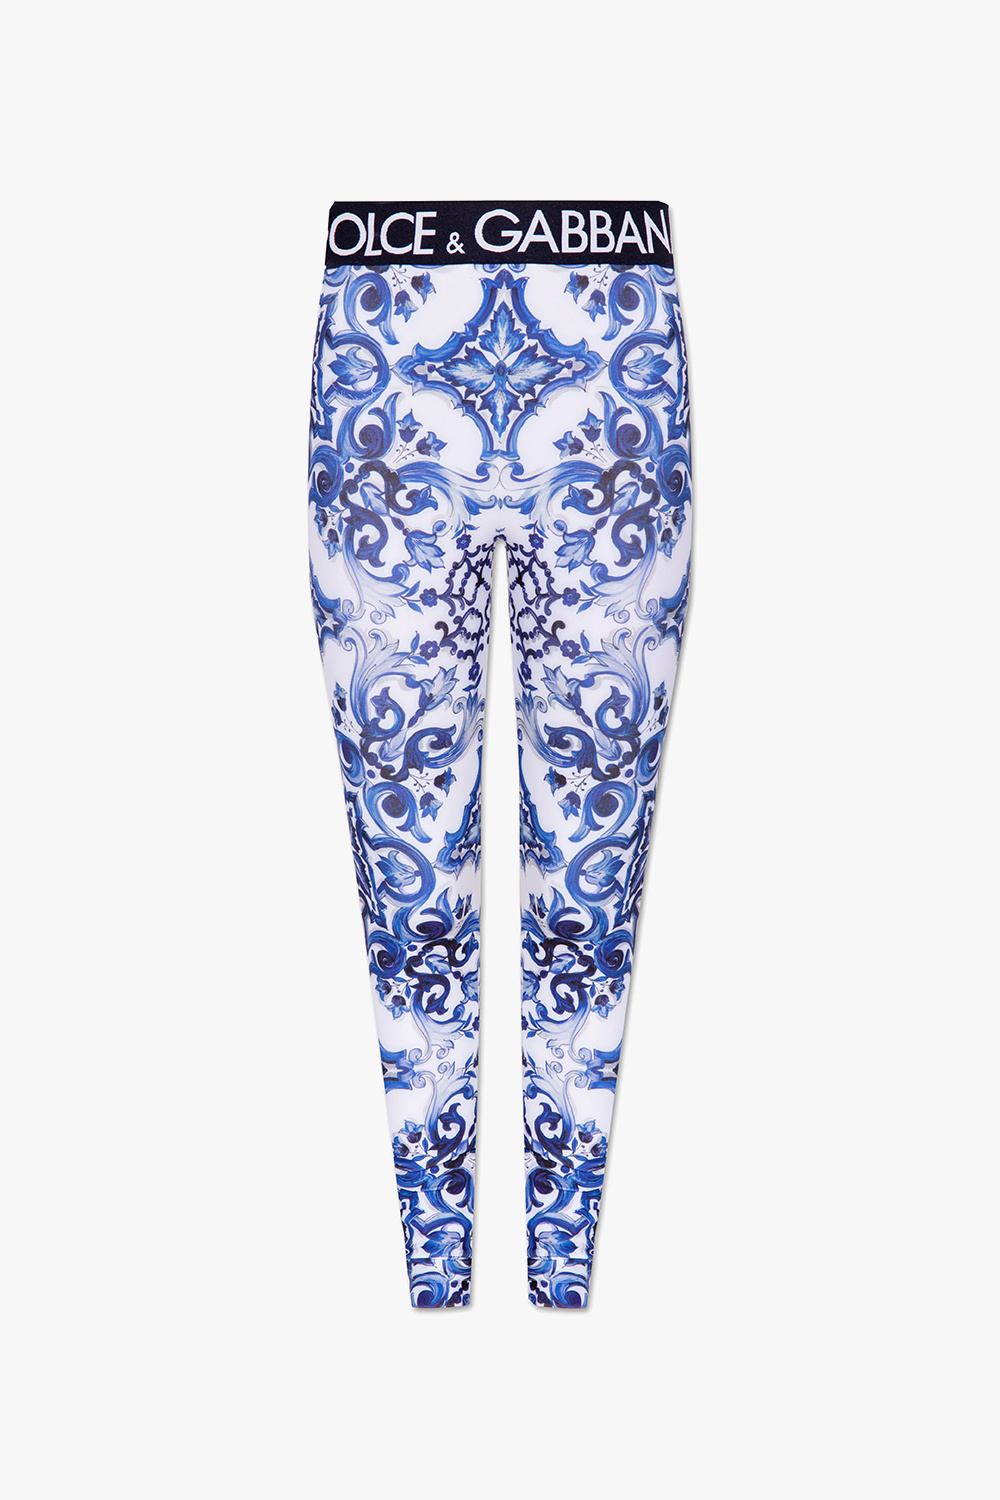 IetpShops Denmark - Patterned leggings Dolce & Gabbana - Чоловічі джинси  dolce&gabbana d&g